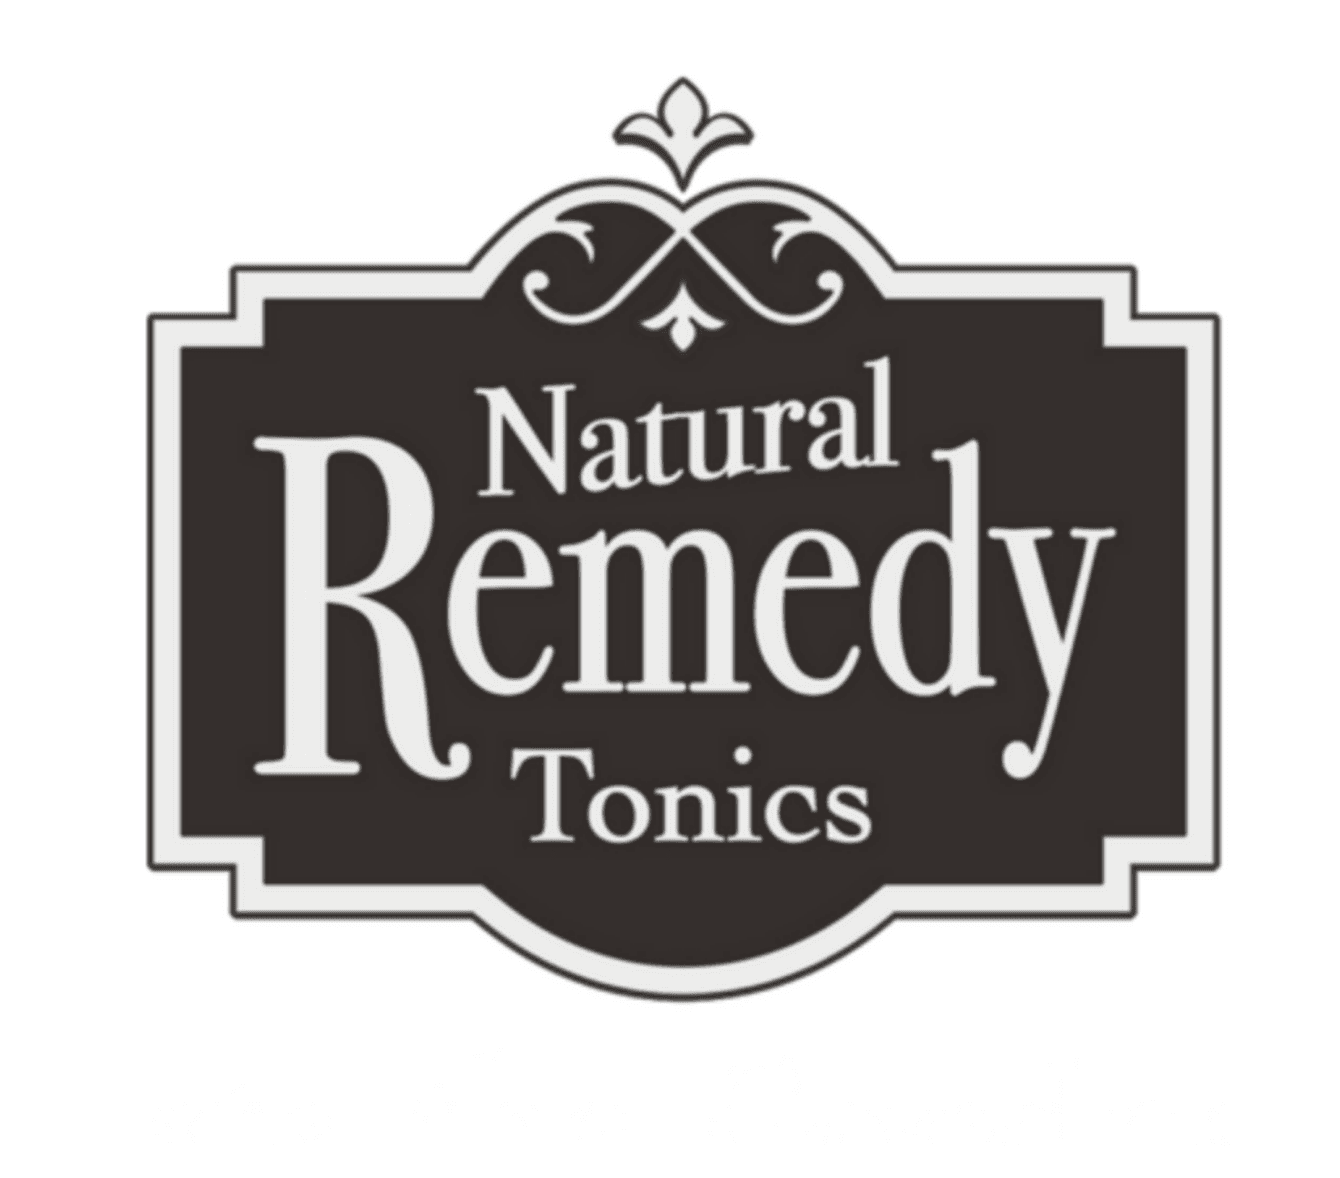 Natural Remedy Tonics